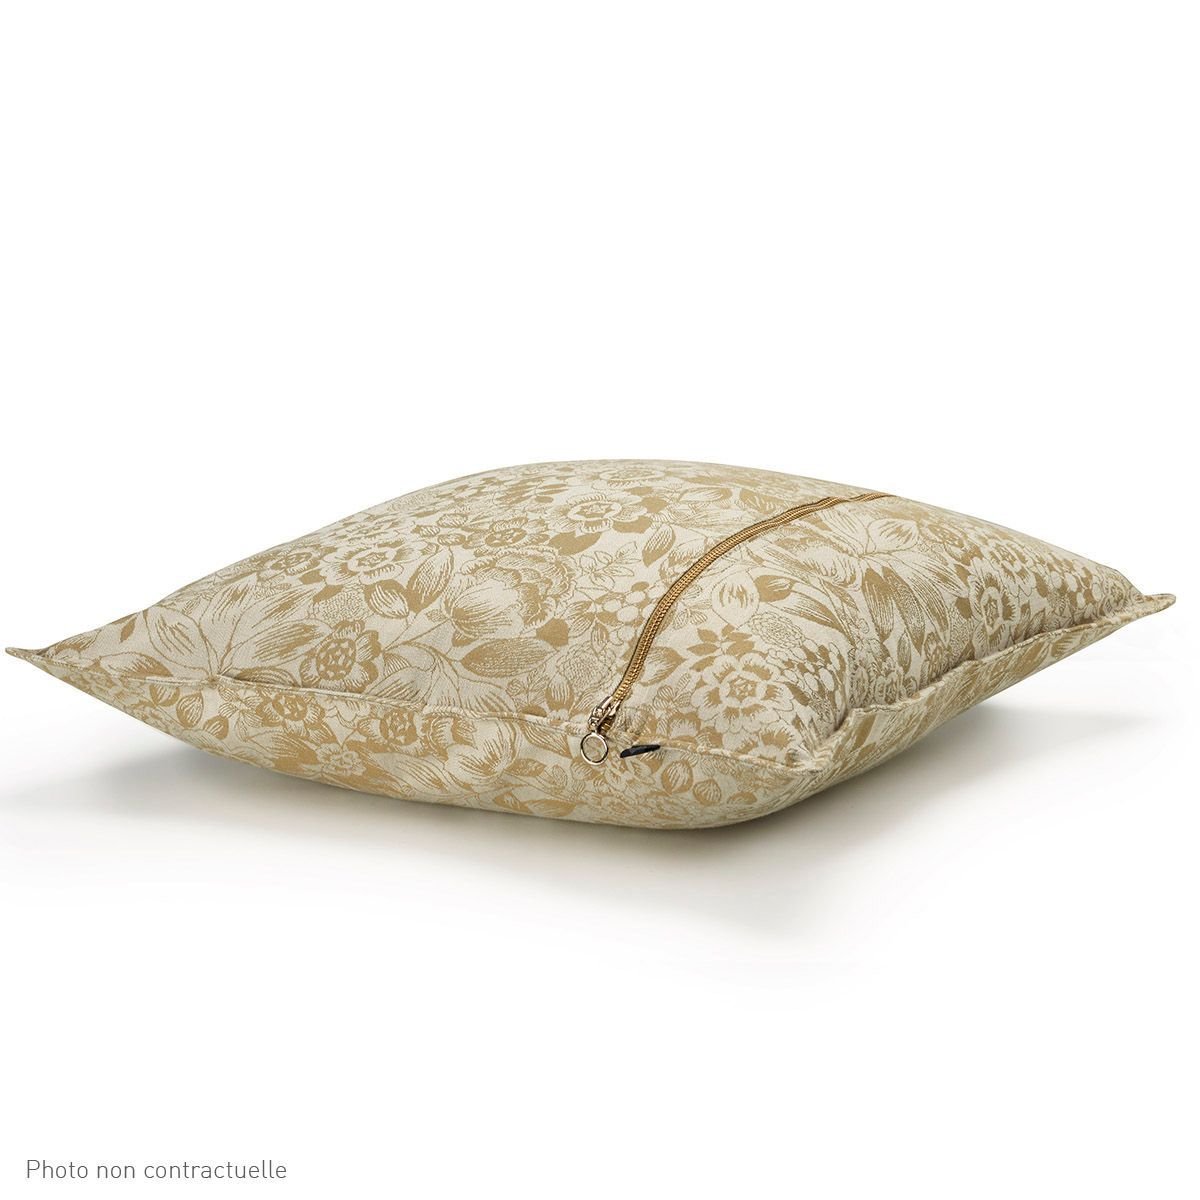 Osmose Cork Decorative Pillows by Le Jacquard Français | Fig Linens